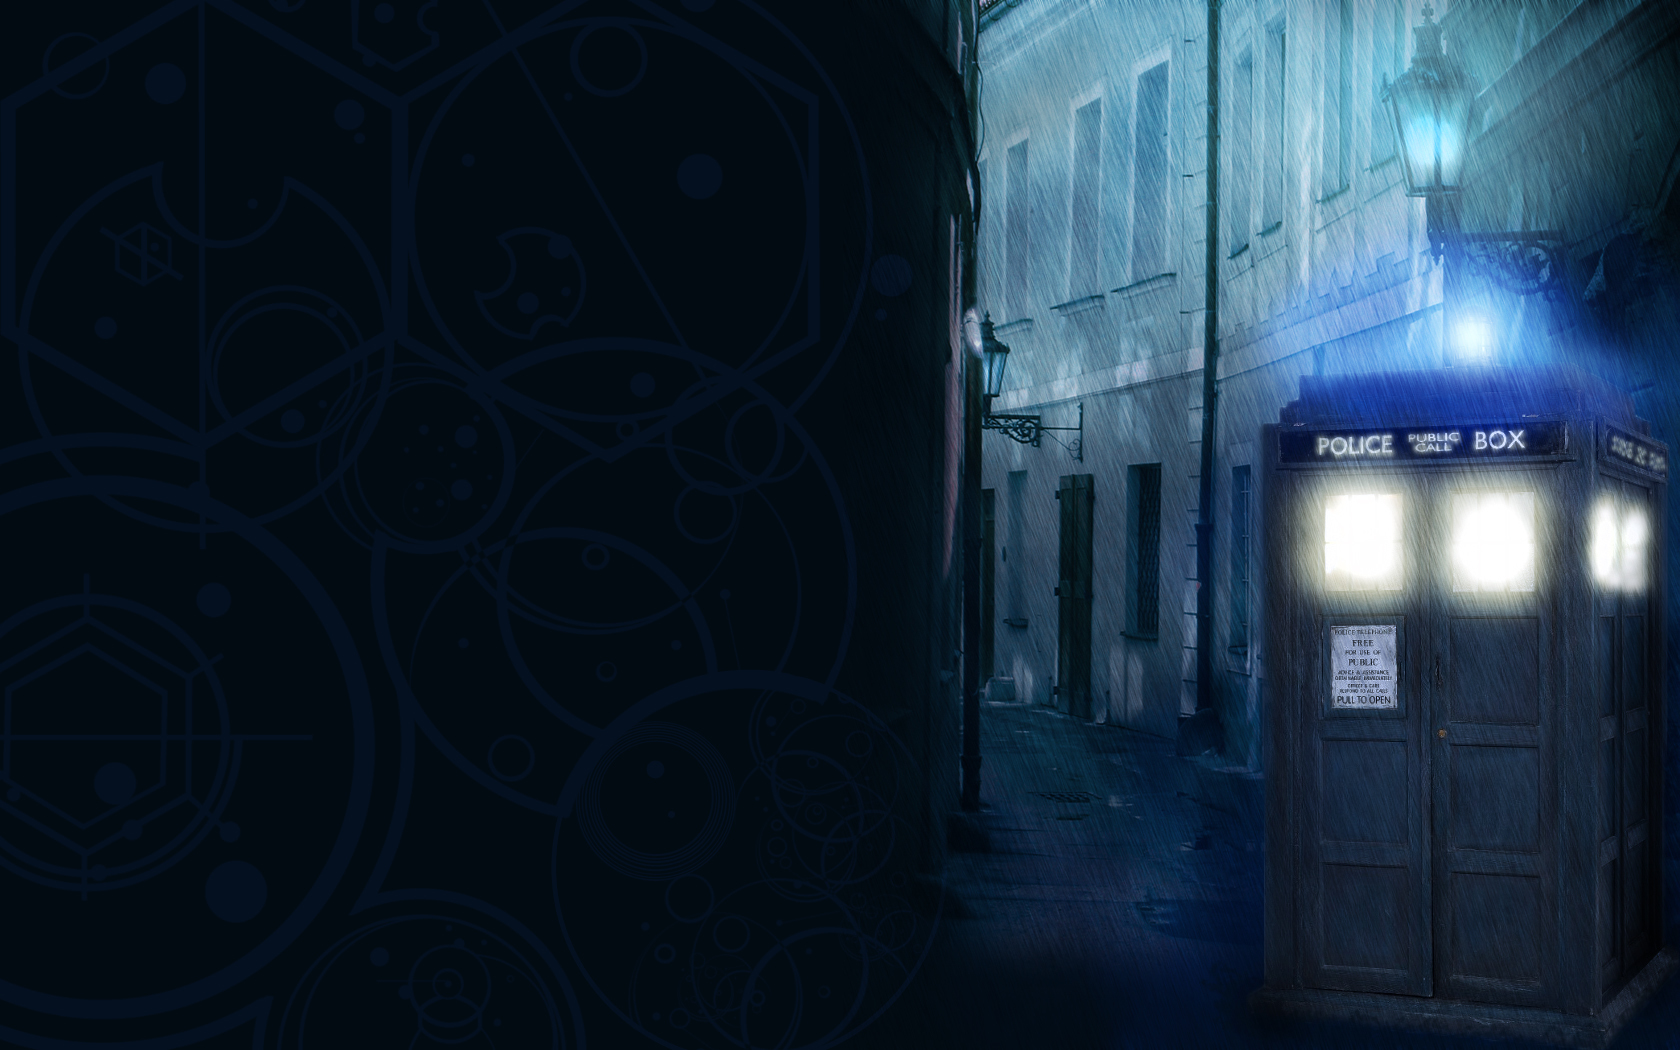 Doctor  Wallpaper on Tardis Doctor Who Hd Wallpaper   General   869313